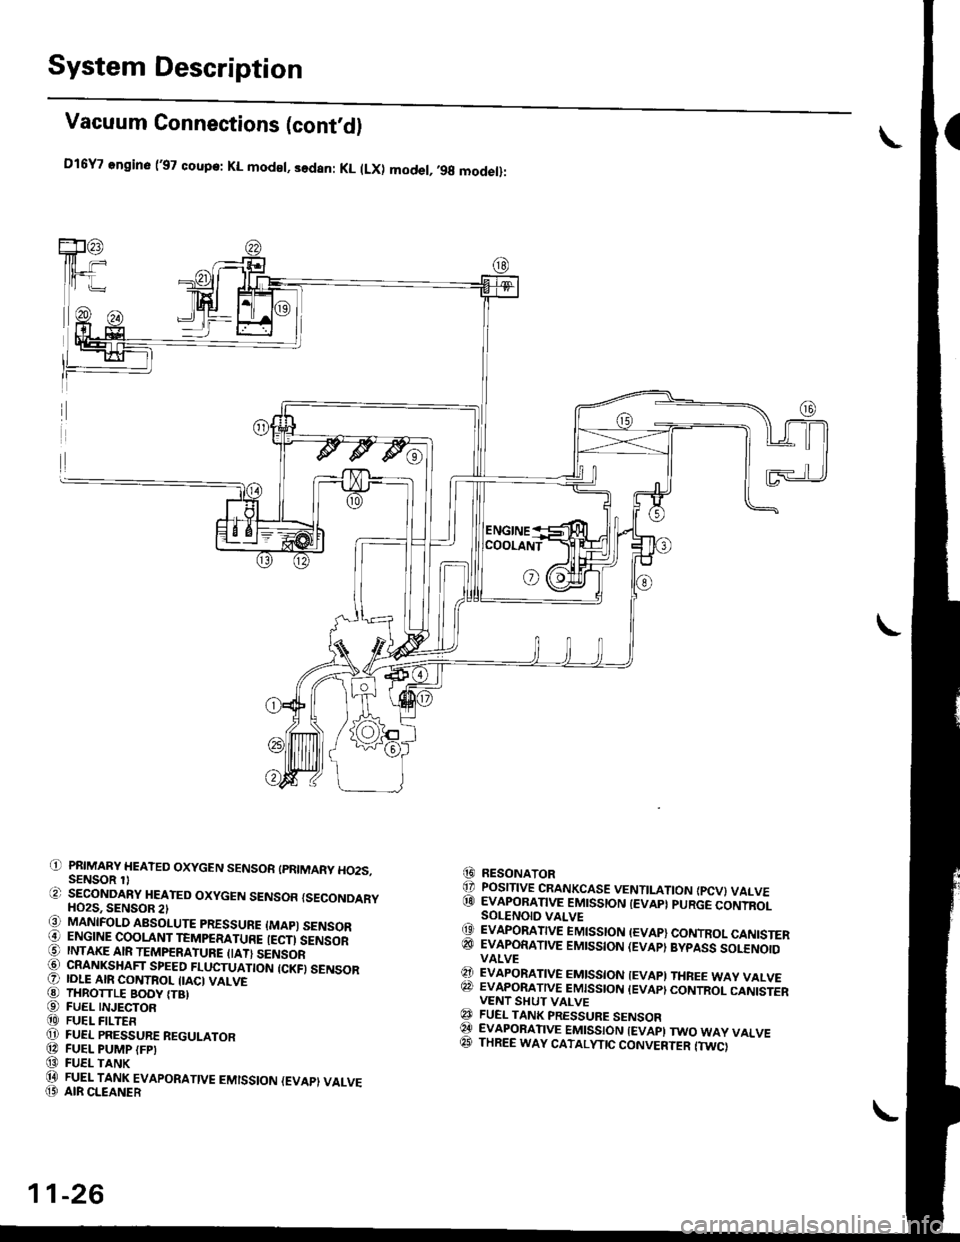 HONDA CIVIC 1997 6.G User Guide System Description
Vacuum Connections (contd)
Dl6Y7 angin6 (97 coup.: KL mod€l, sedan: KL (LX) model,,9g modet):
i1] PRIMARY HEATED OXYGEN SENSOR (PRIMARY HO2S,SENSOR 1)E) SECONDARY HEATED OXYGEN 